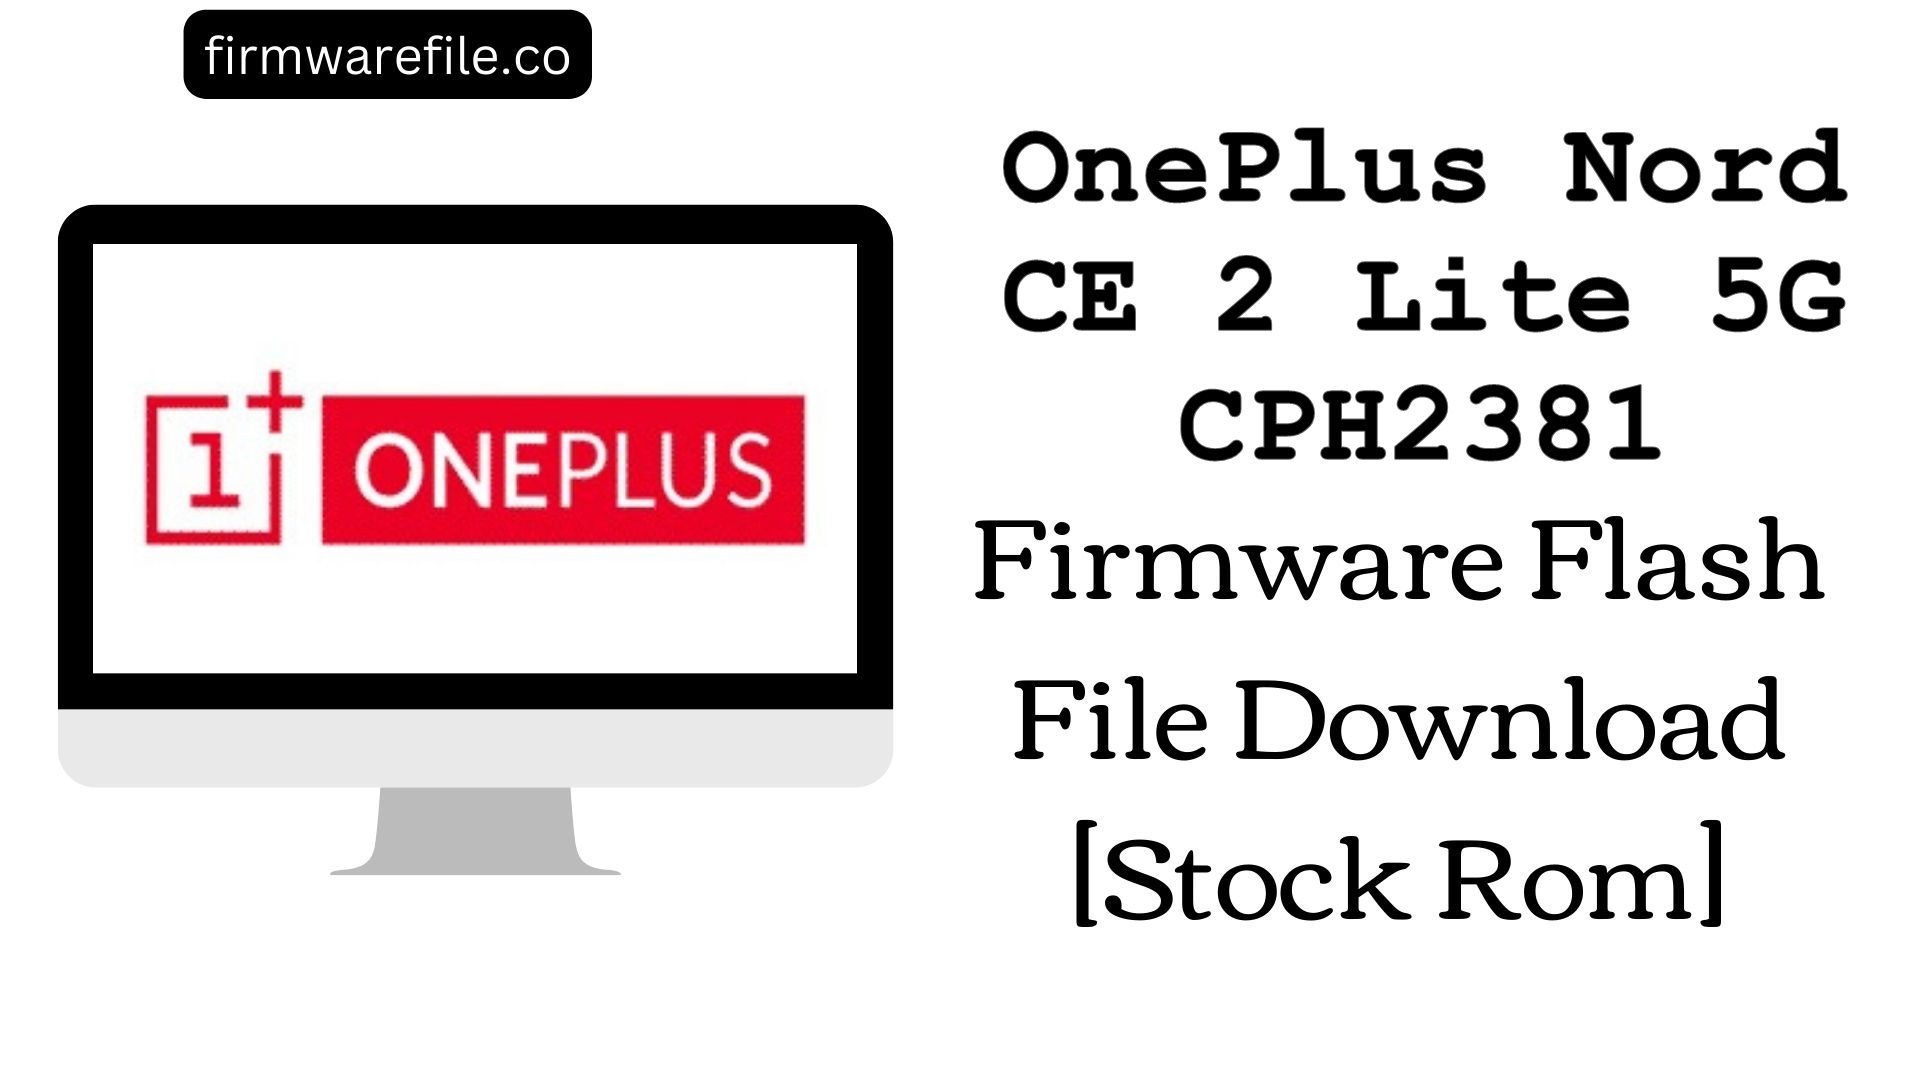 OnePlus Nord CE 2 Lite 5G CPH2381